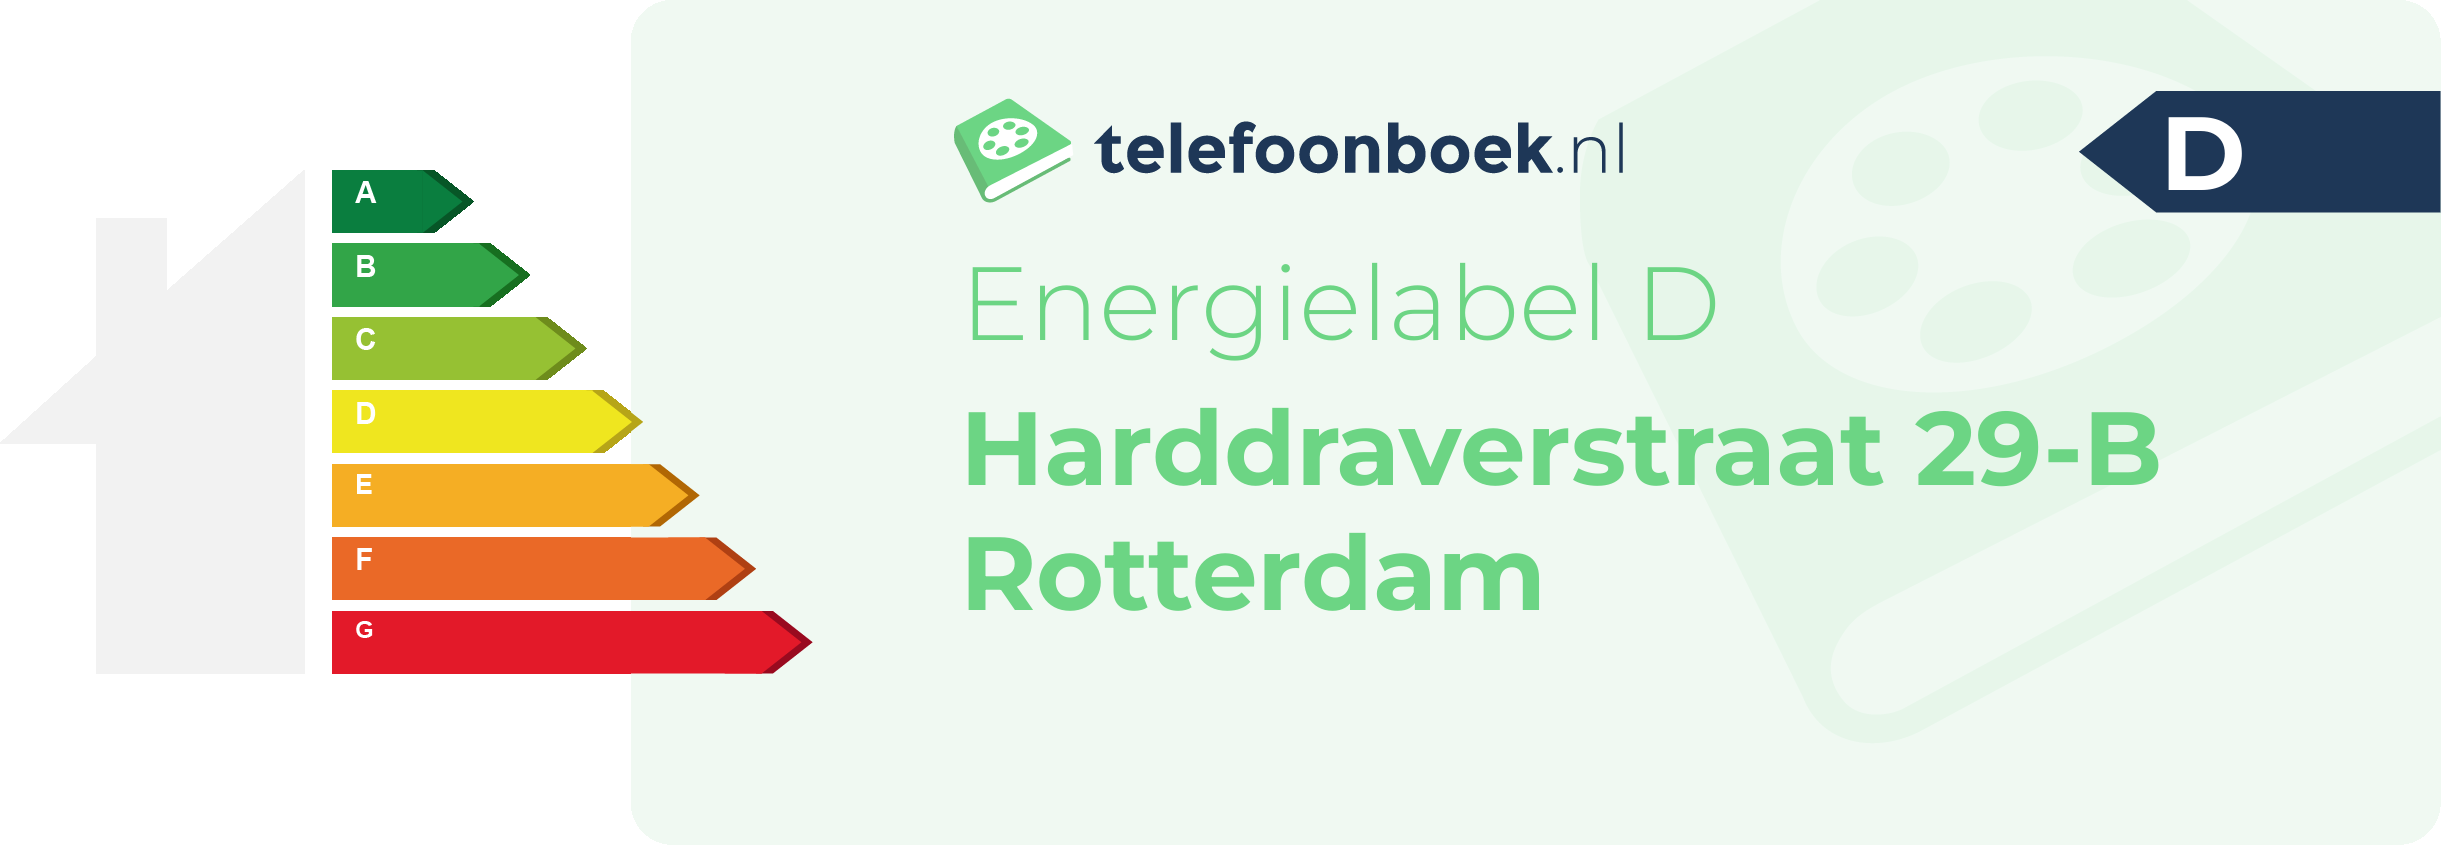 Energielabel Harddraverstraat 29-B Rotterdam